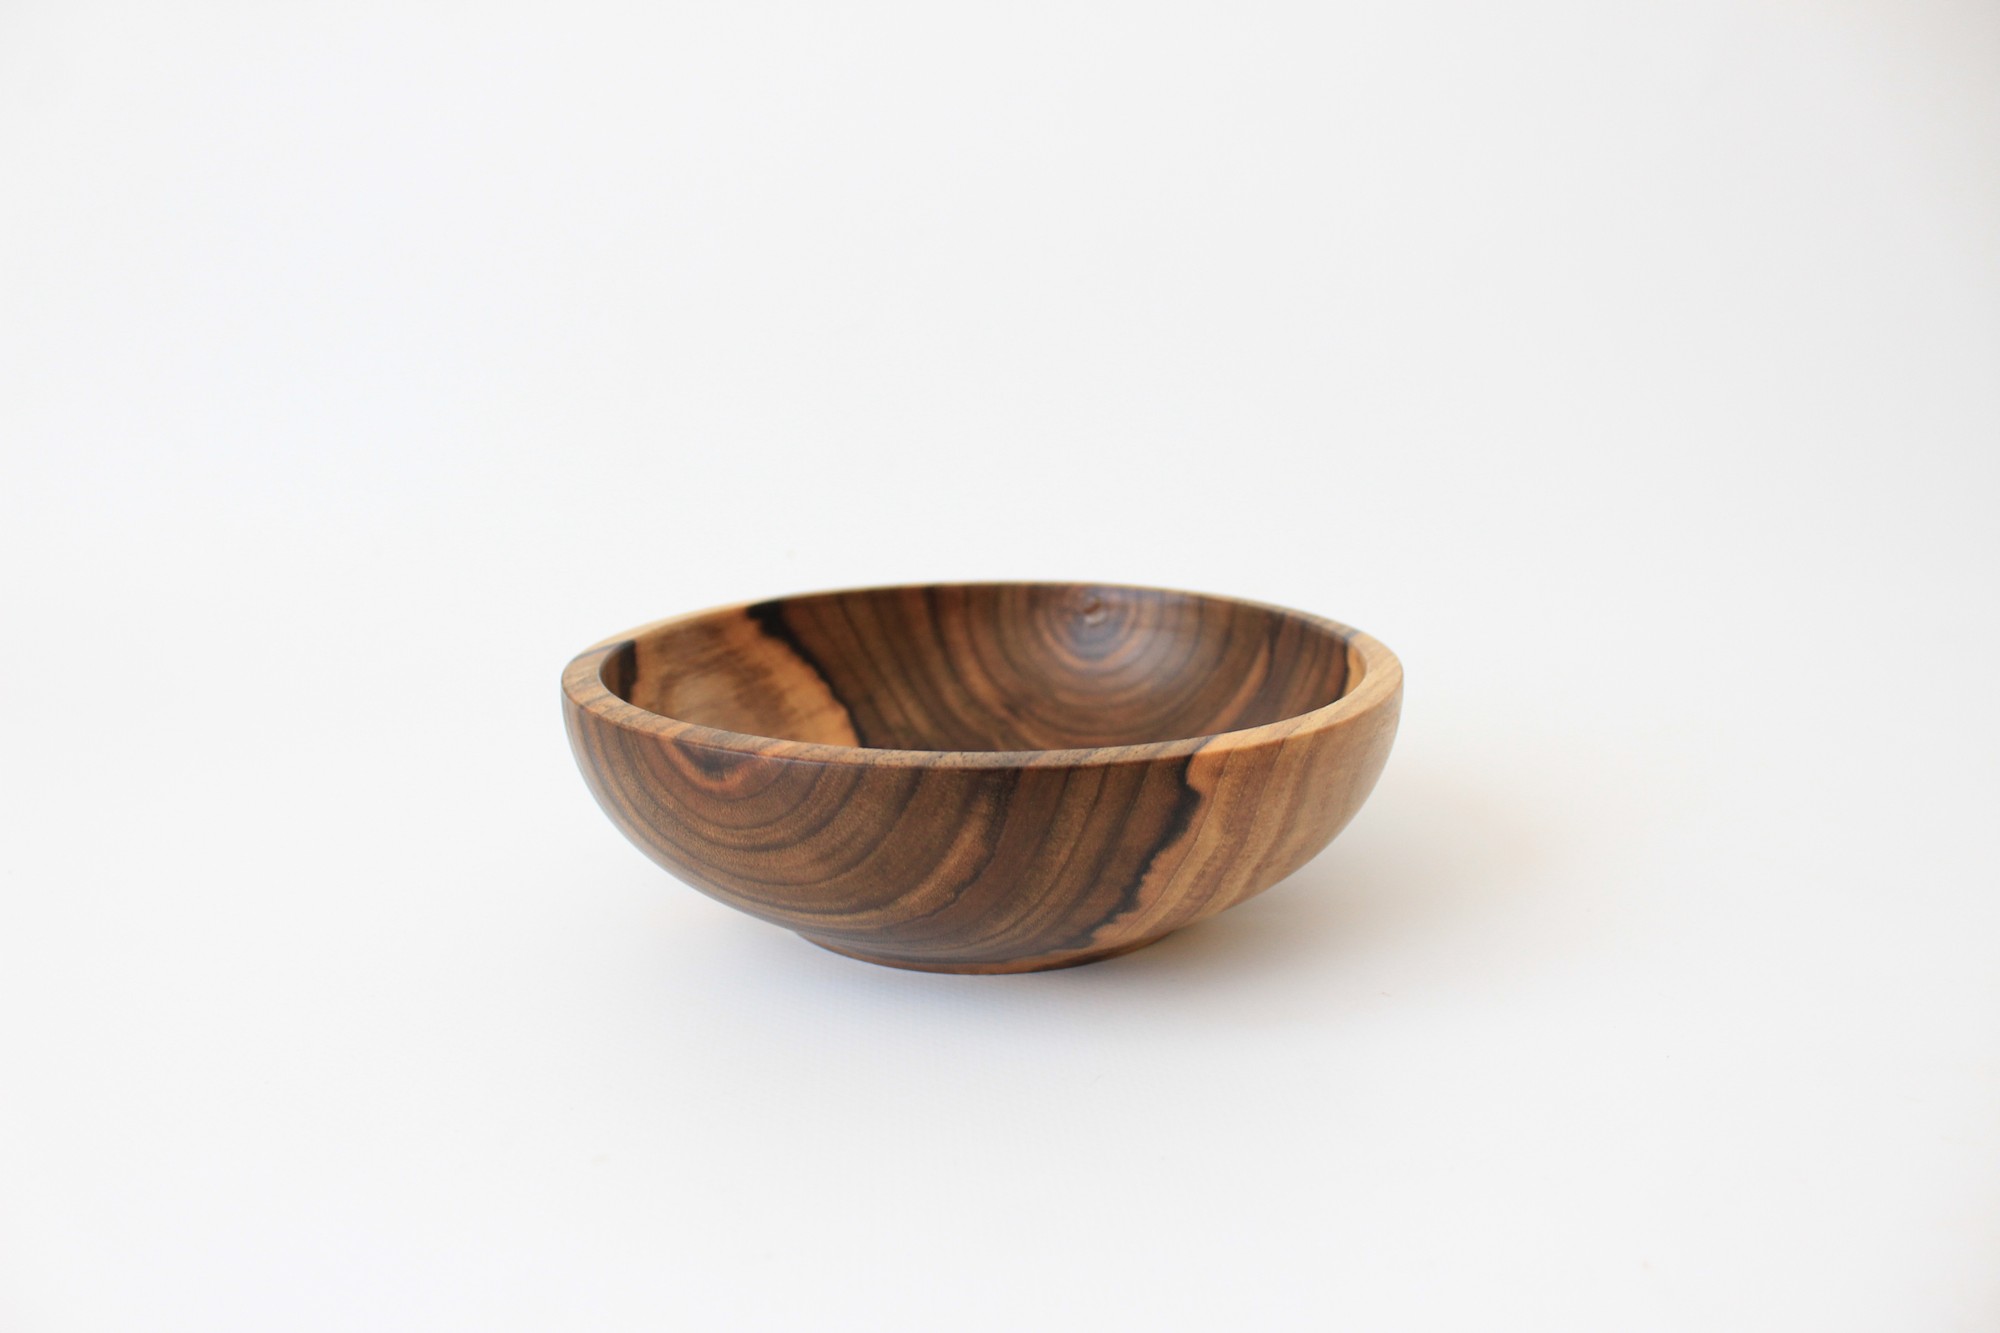 ramen bowl set, cereal bowl, rustic handmade dinnerware wooden , round pasta bowl, small berry dish